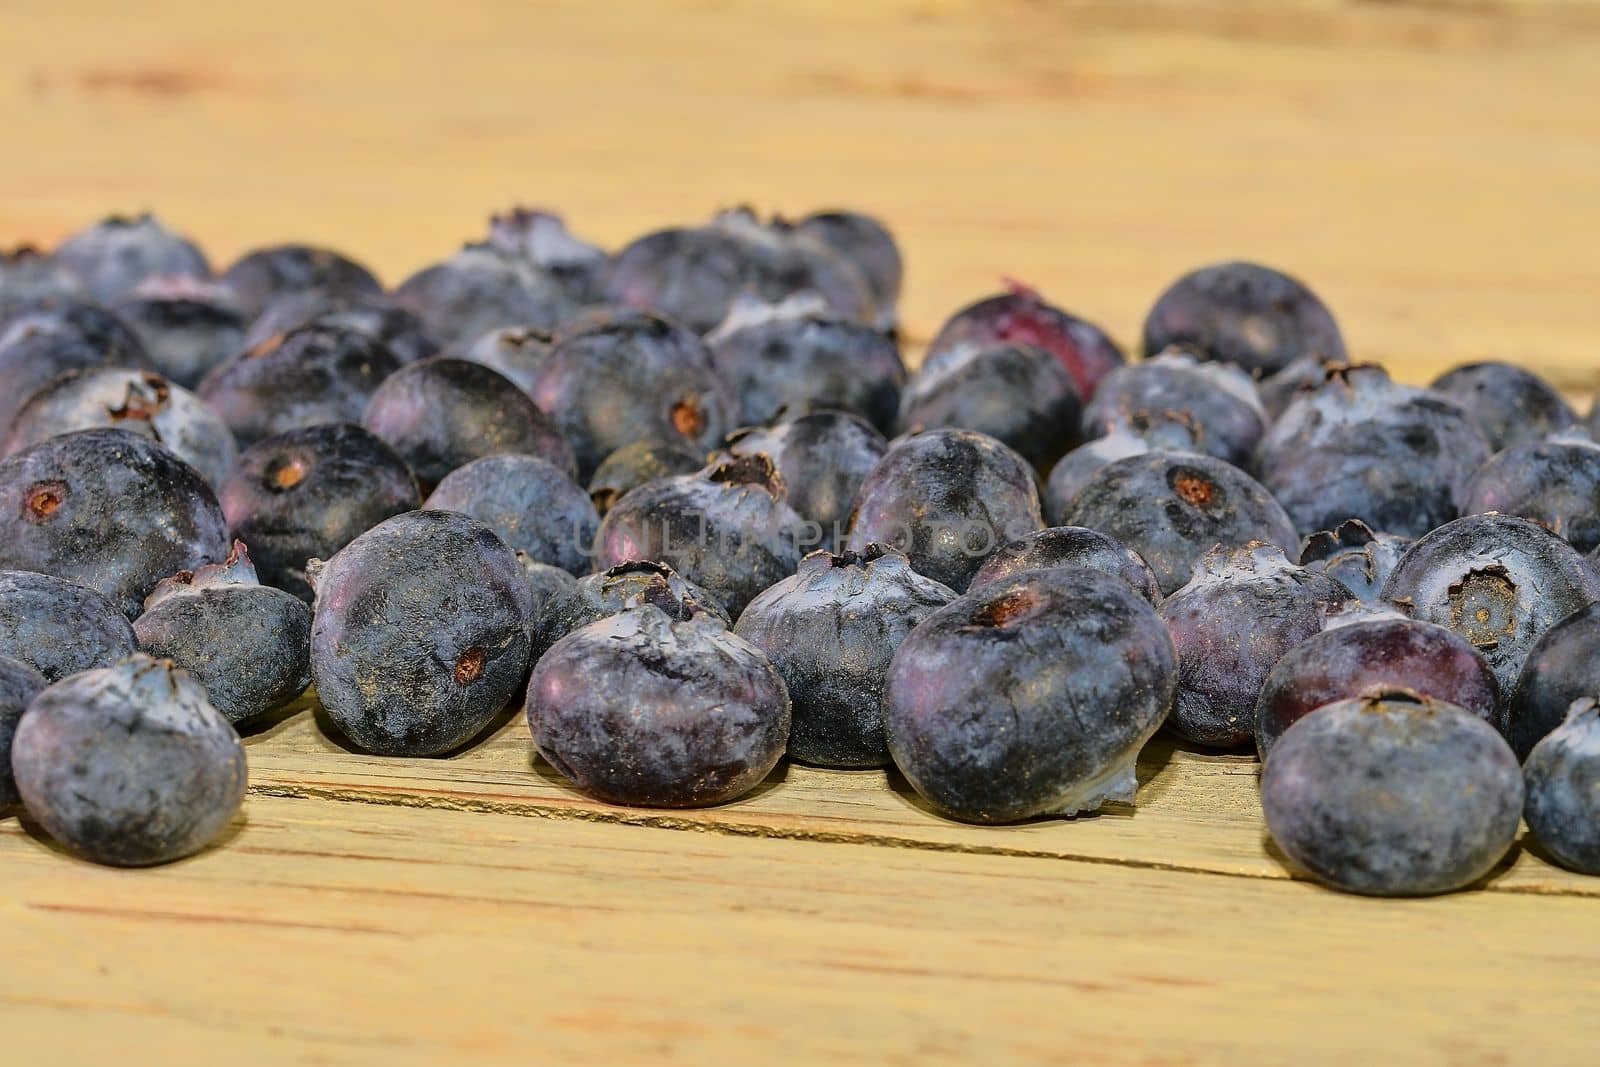 Blueberries  on white wooden background. Bilberries, blueberries, huckleberries, whortleberries by roman_nerud